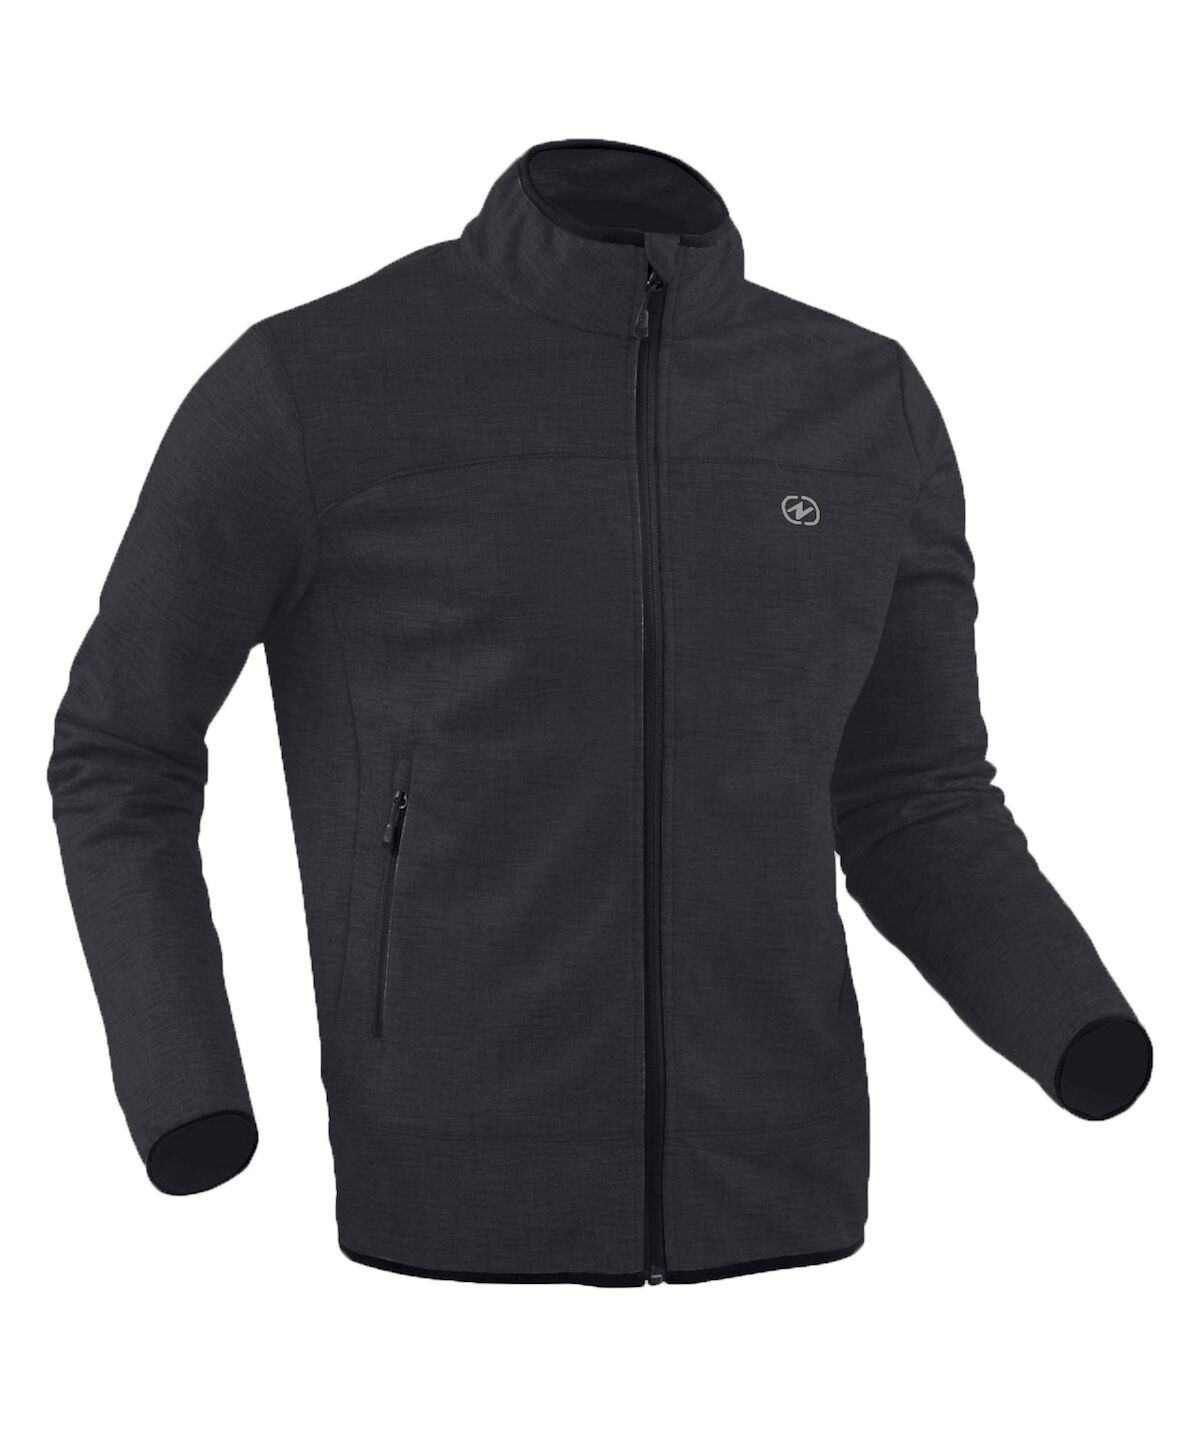 Damart Sport - Waterproof and breathable Softshell jacket - Softshell jacket - Men's